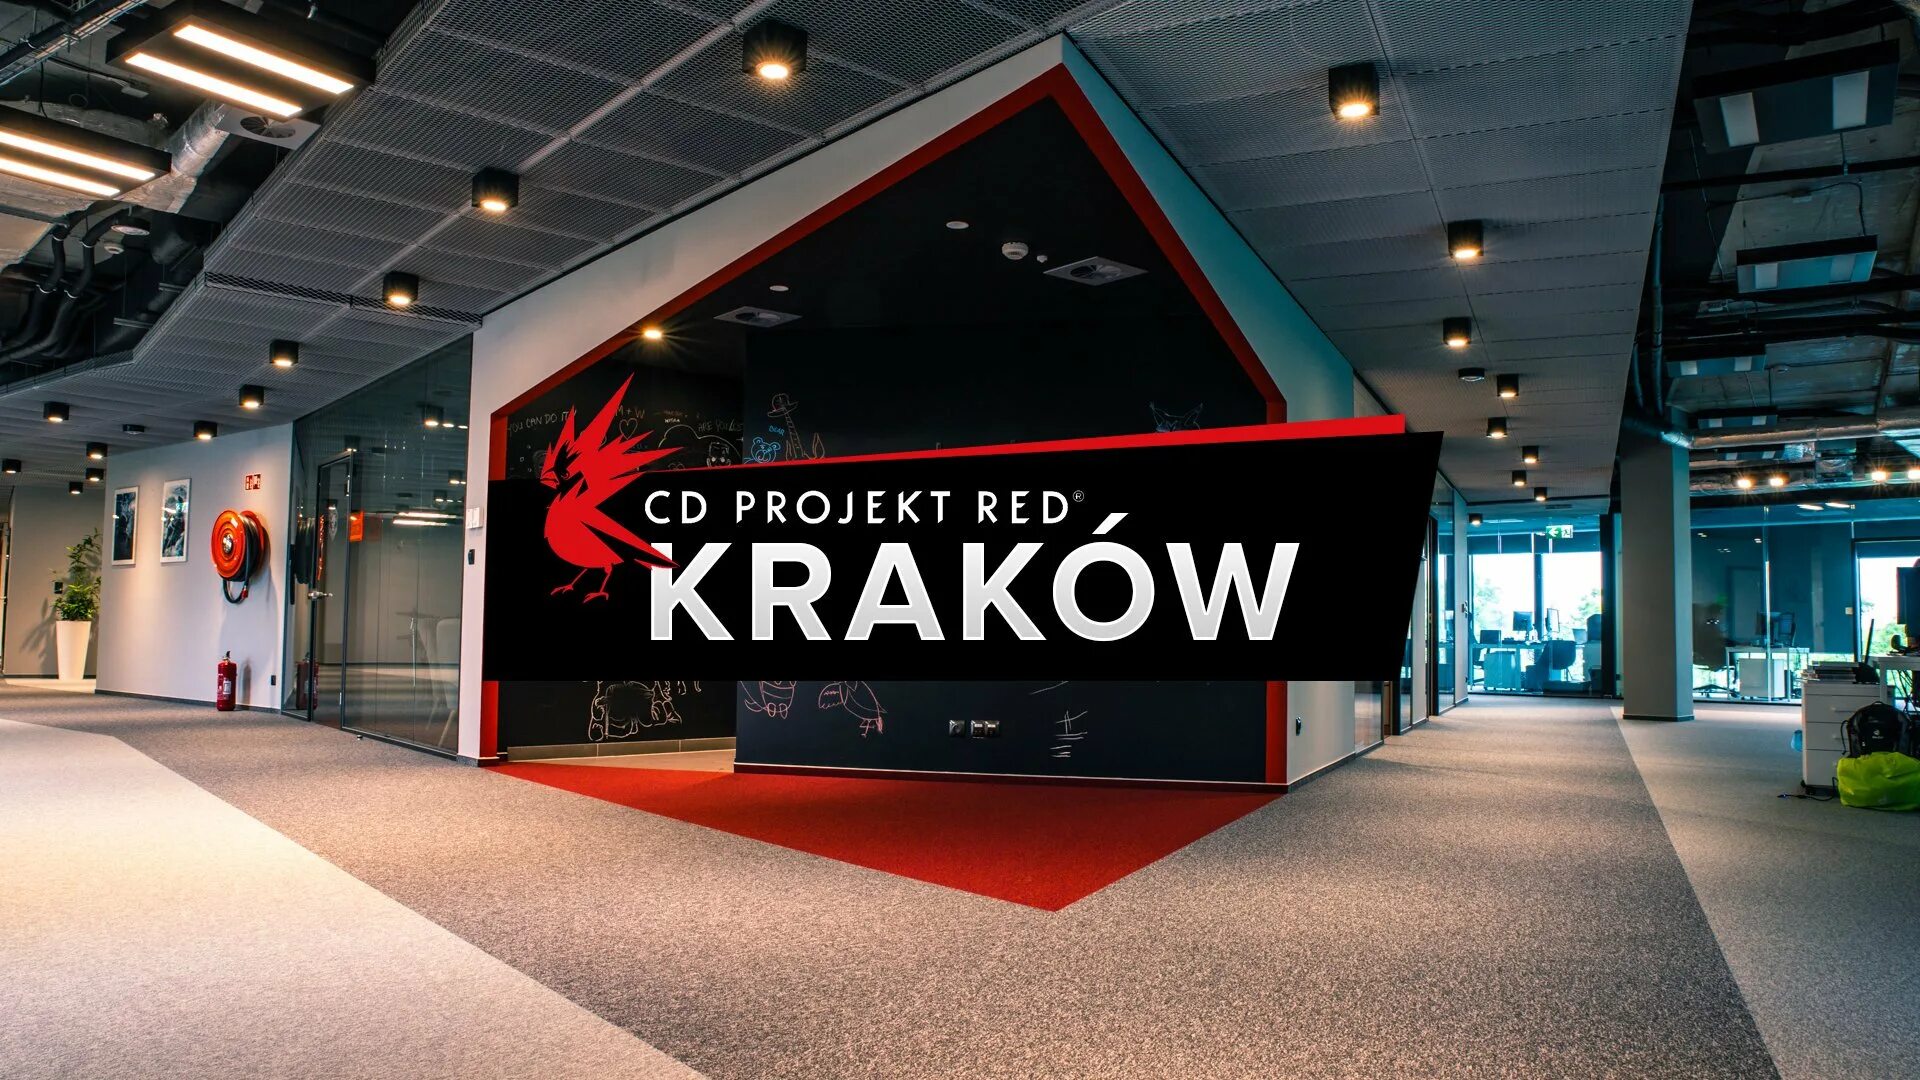 Студия CD Projekt Red. Штаб CD Projekt Red. CD Projekt Red офис. Офис CD Projekt Red в Варшаве.